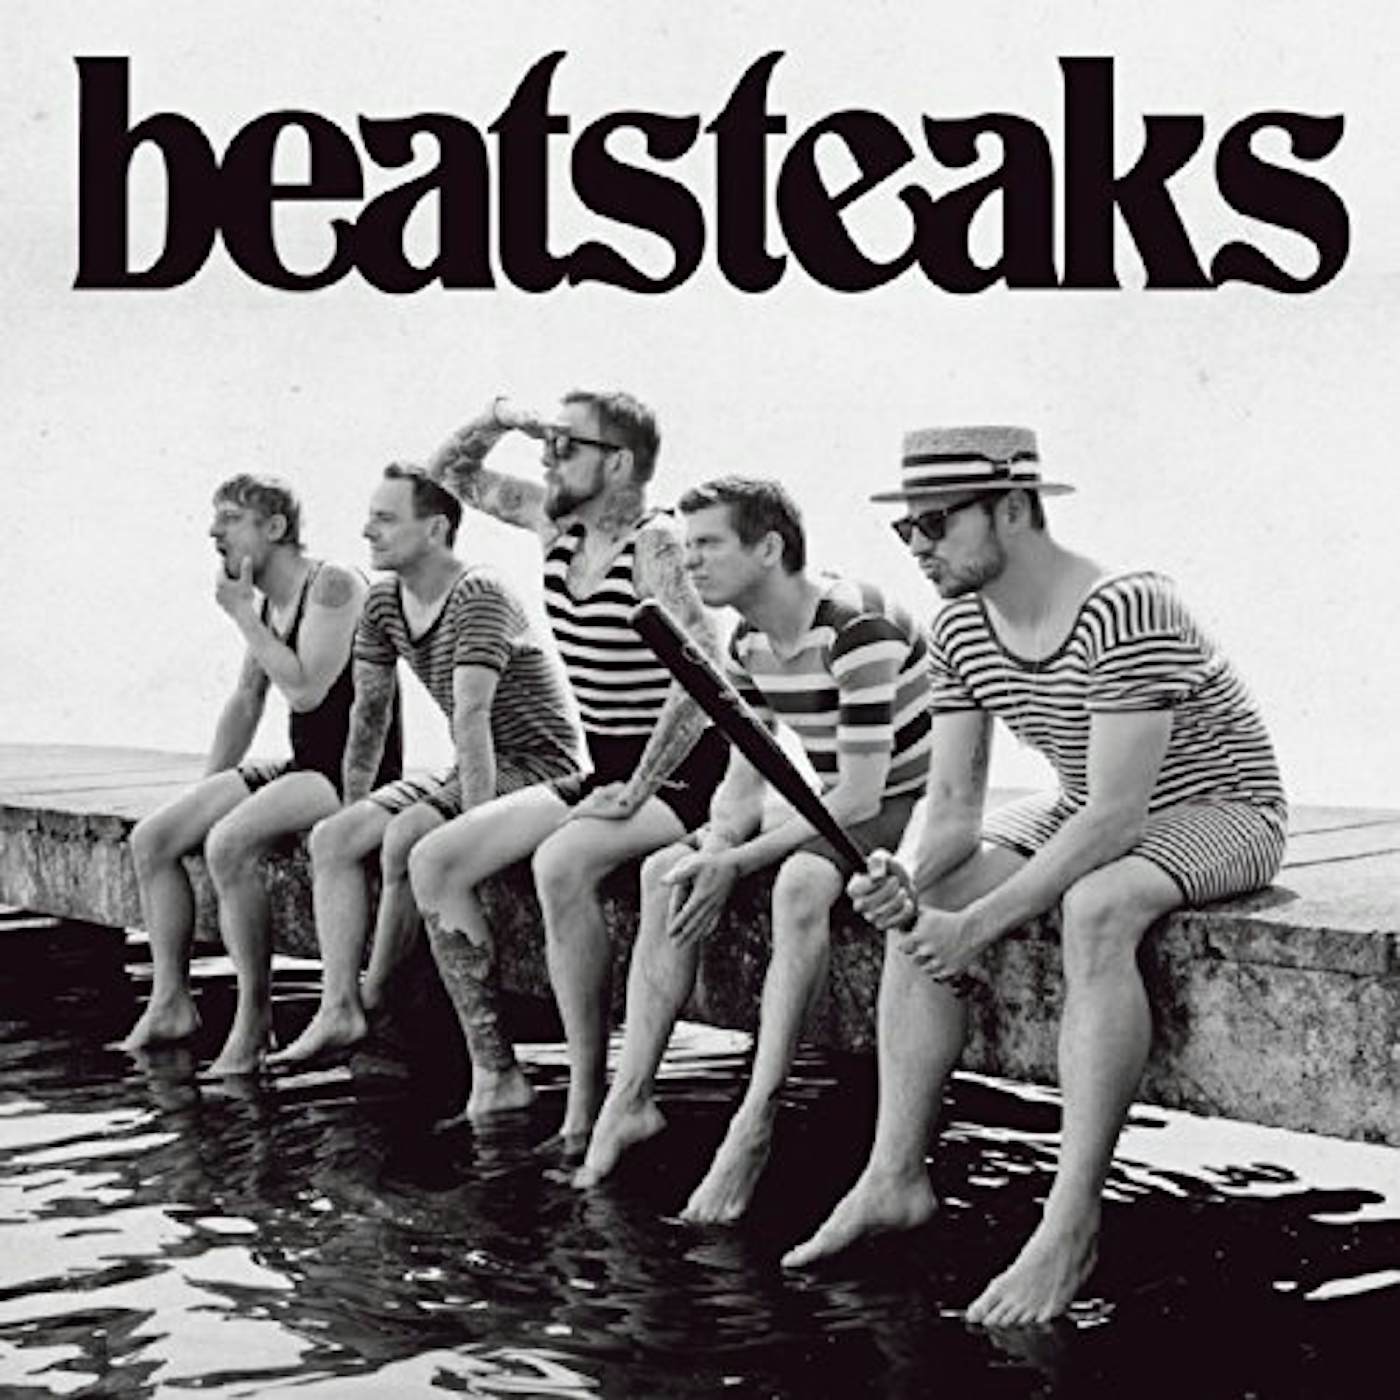 Beatsteaks Vinyl Record